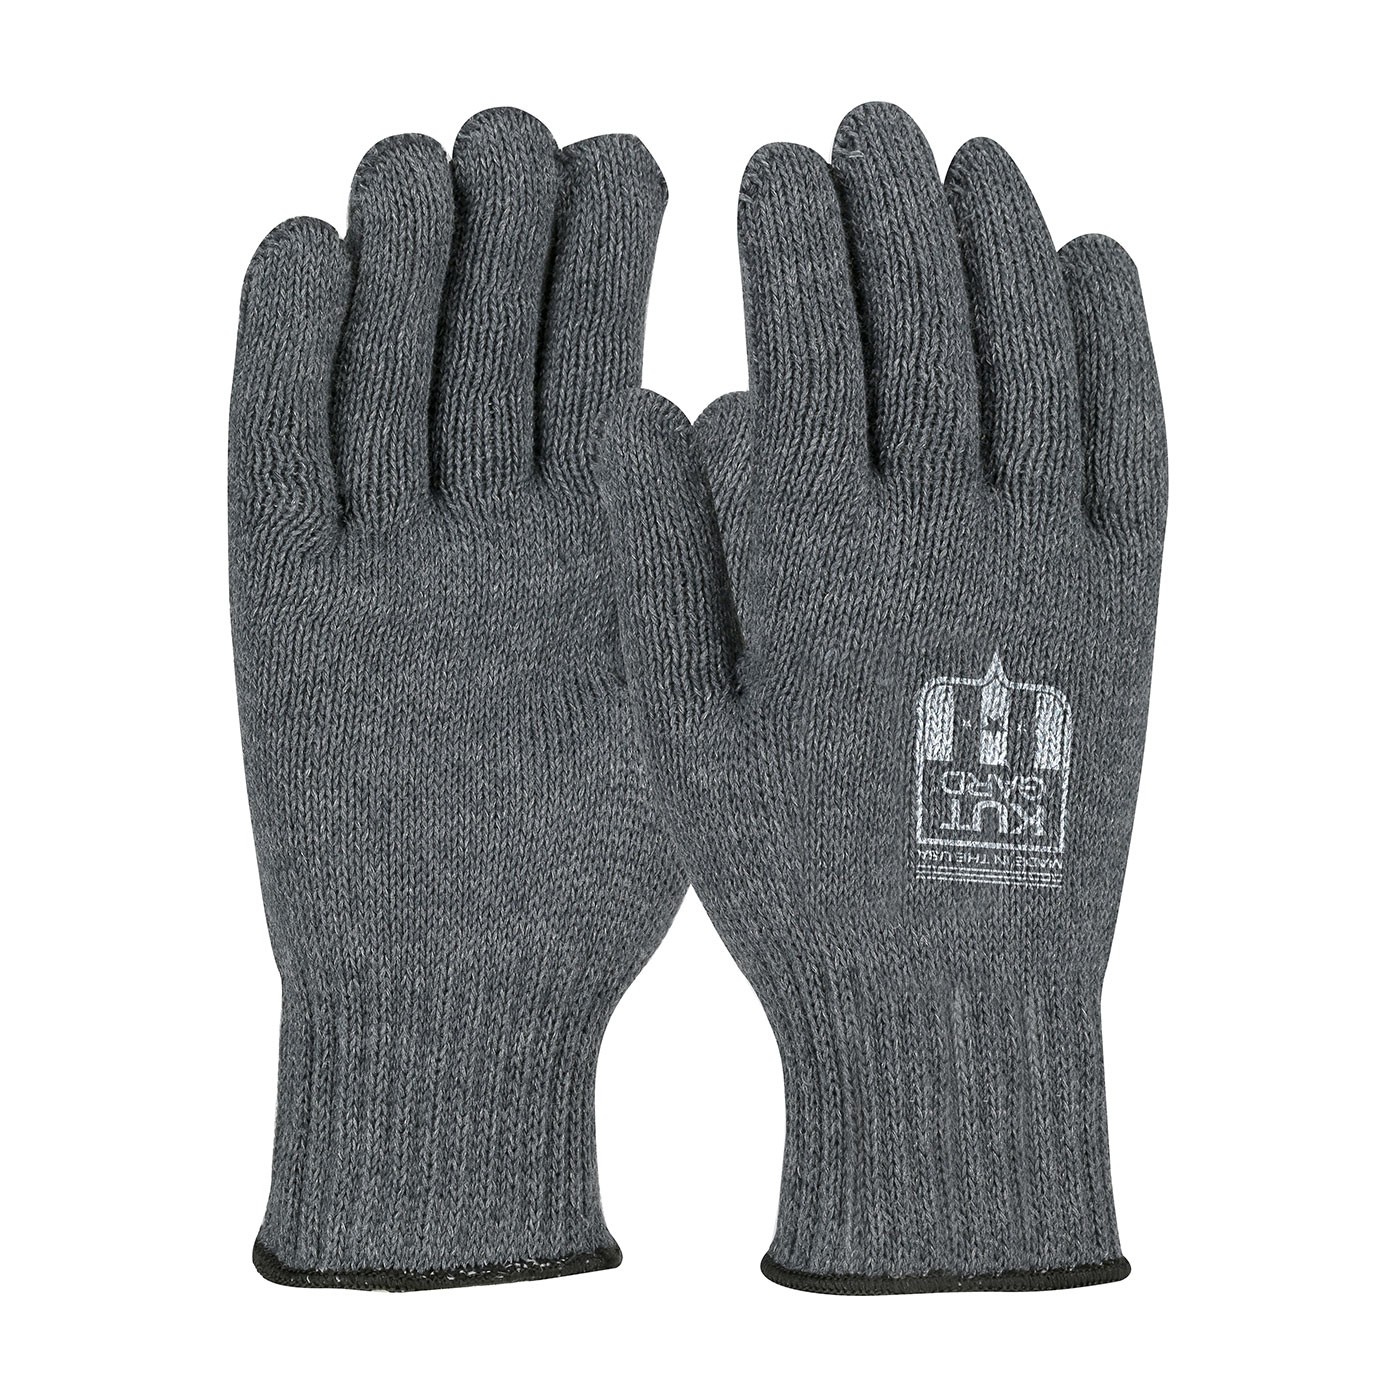 Kut Gard® Seamless Knit ACP / Kevlar® Blended Glove with Kevlar® Lining - Medium Weight  (#07-KAB720)